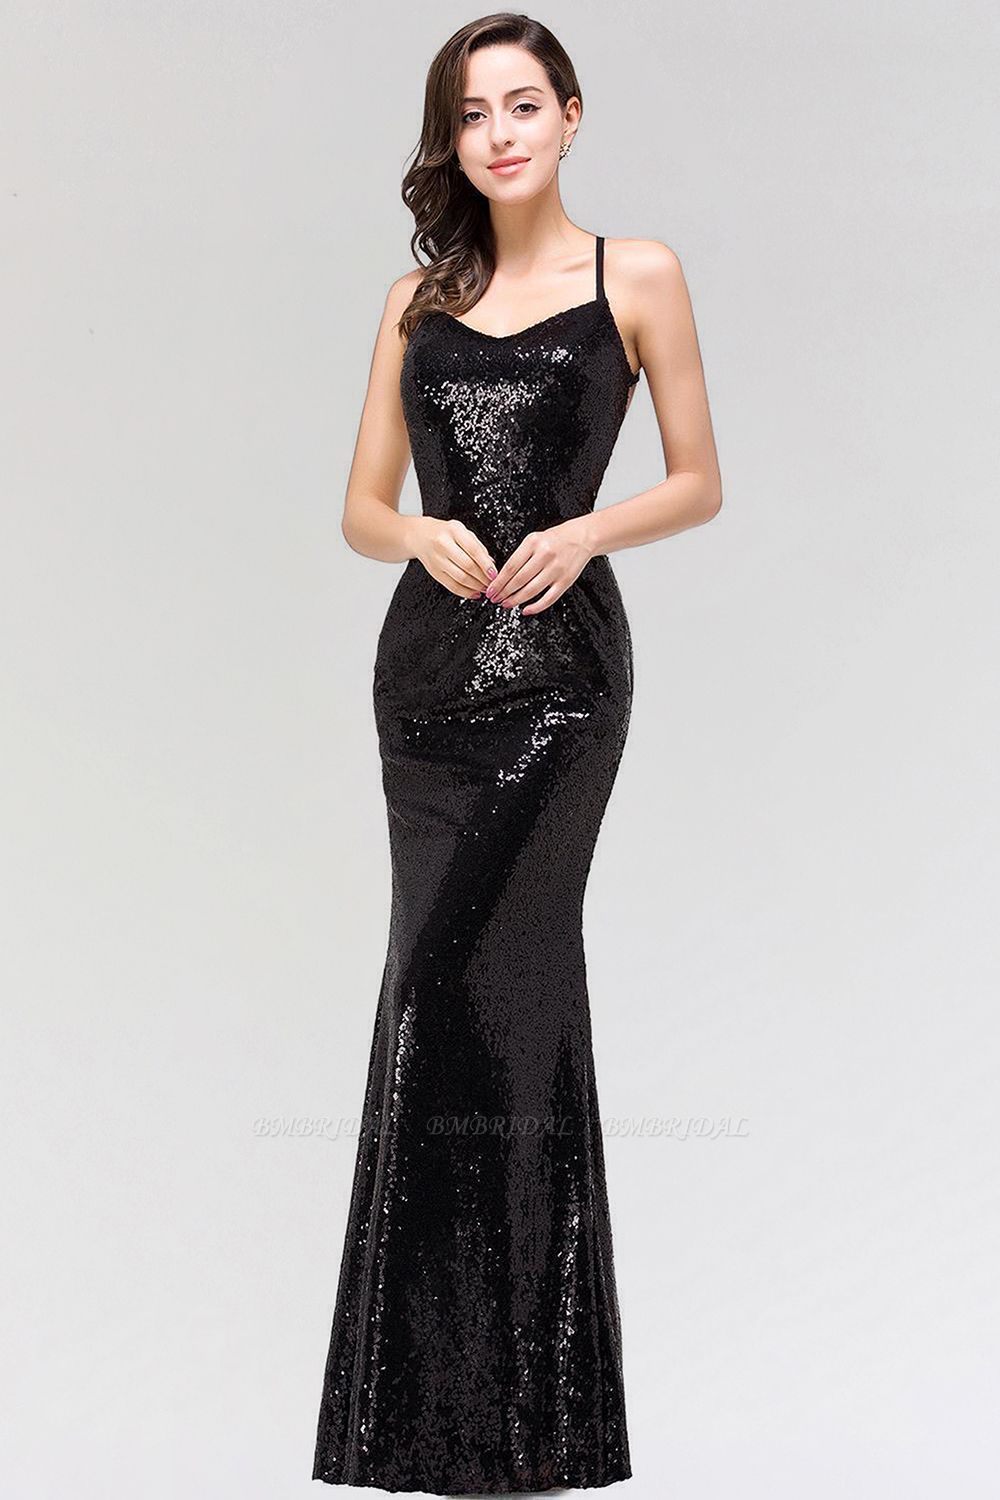 BMbridal Elegant Mermaid Sequined Long Black Bridesmaid Dress with Spaghetti Straps